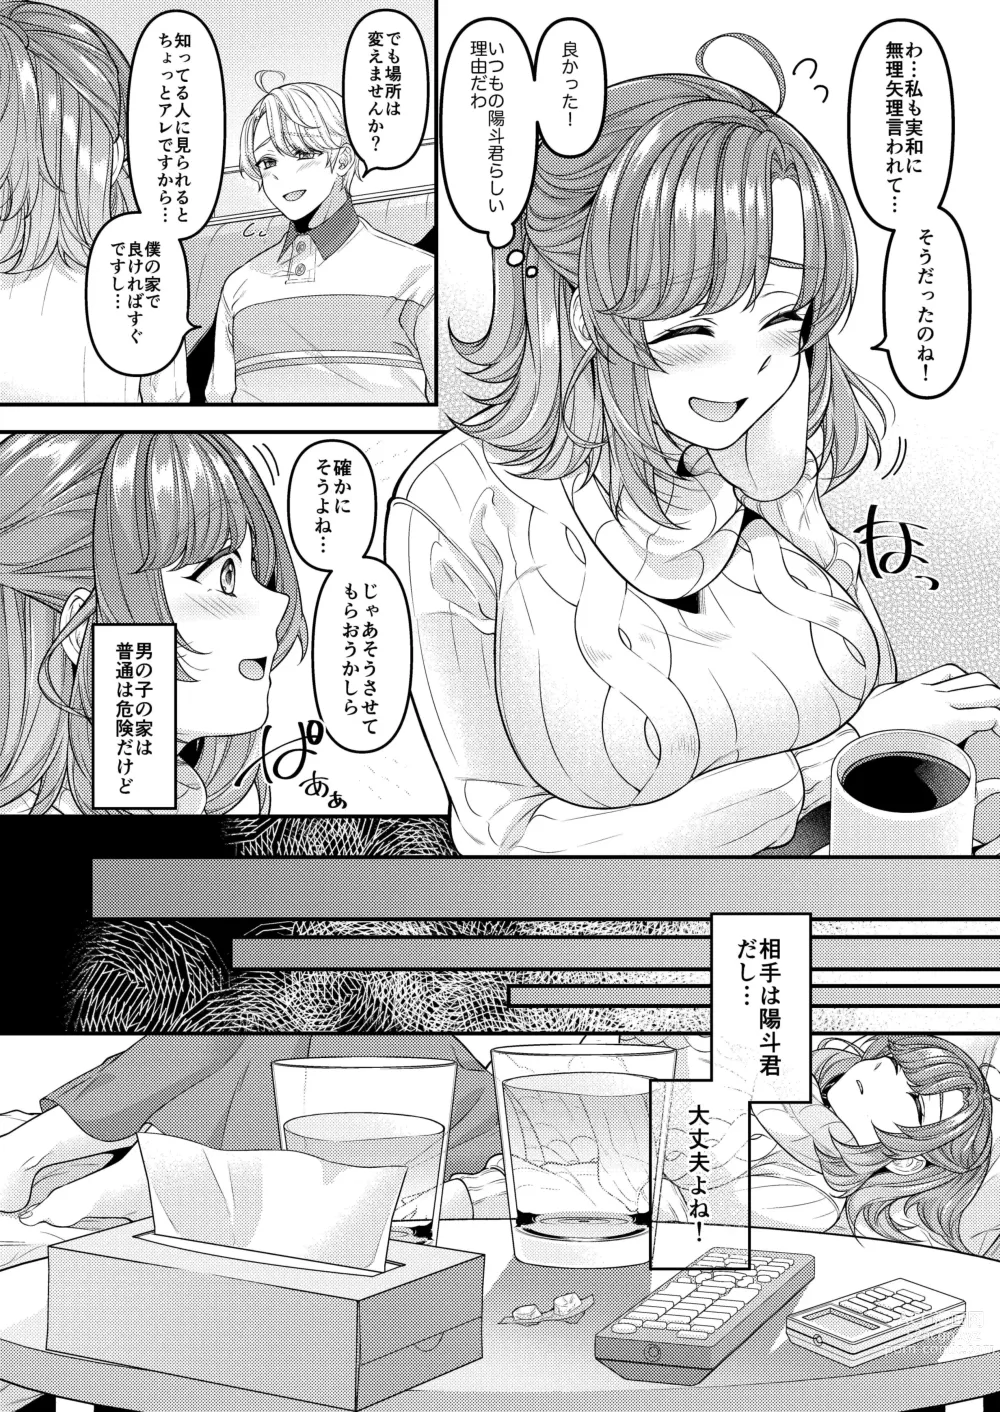 Page 7 of doujinshi Okaa-san, Mamakatsu ni Hamattemasu - Im addicted to feeling good with young guys.